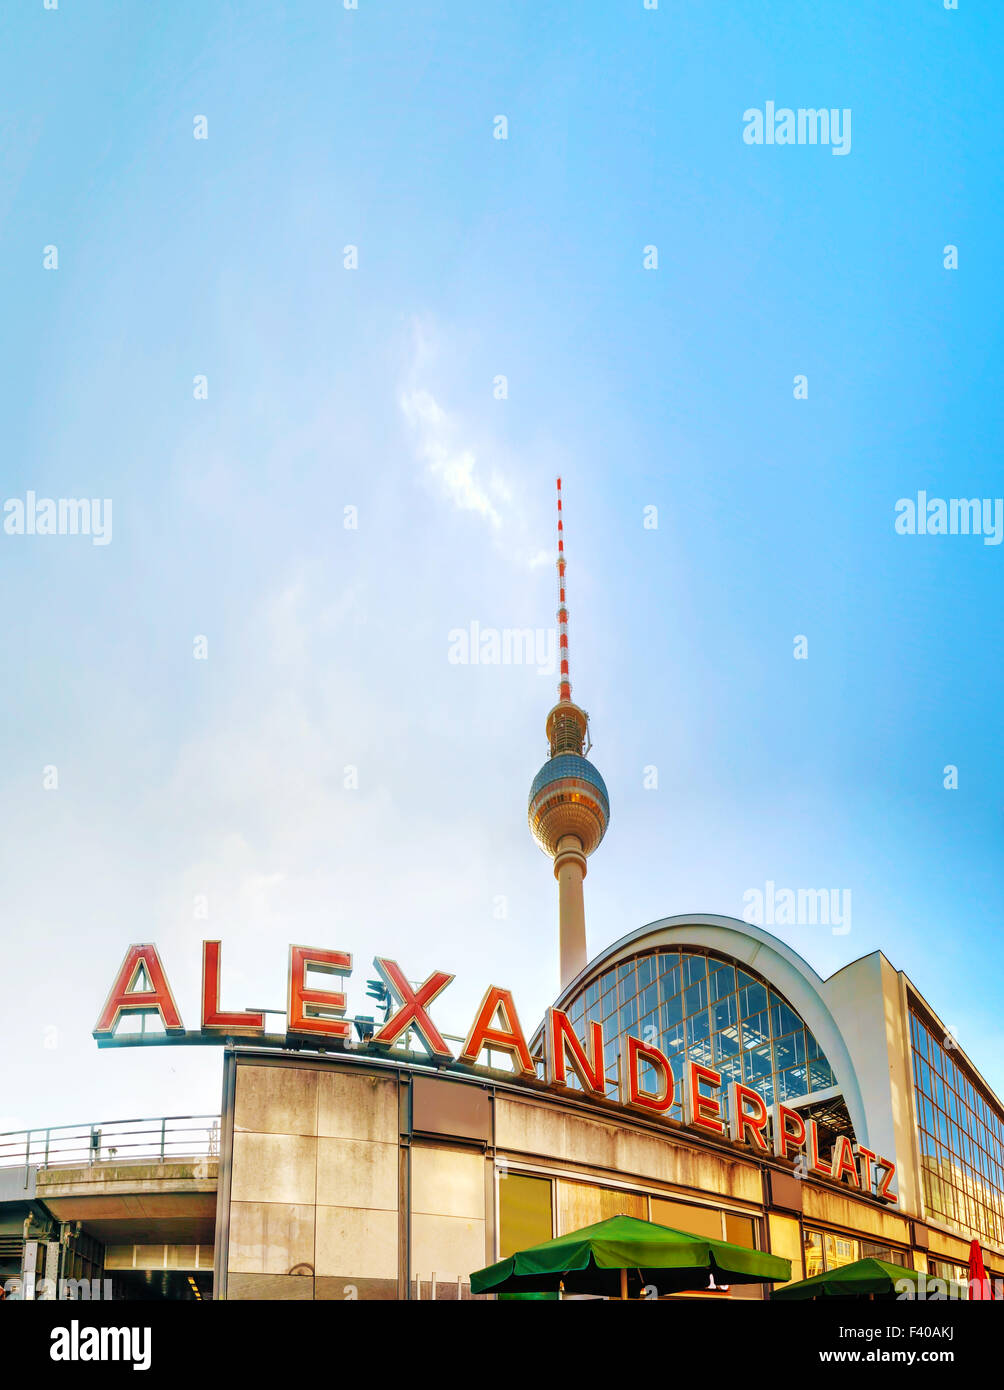 Alexanderplatz subway station in Berlin Stock Photo